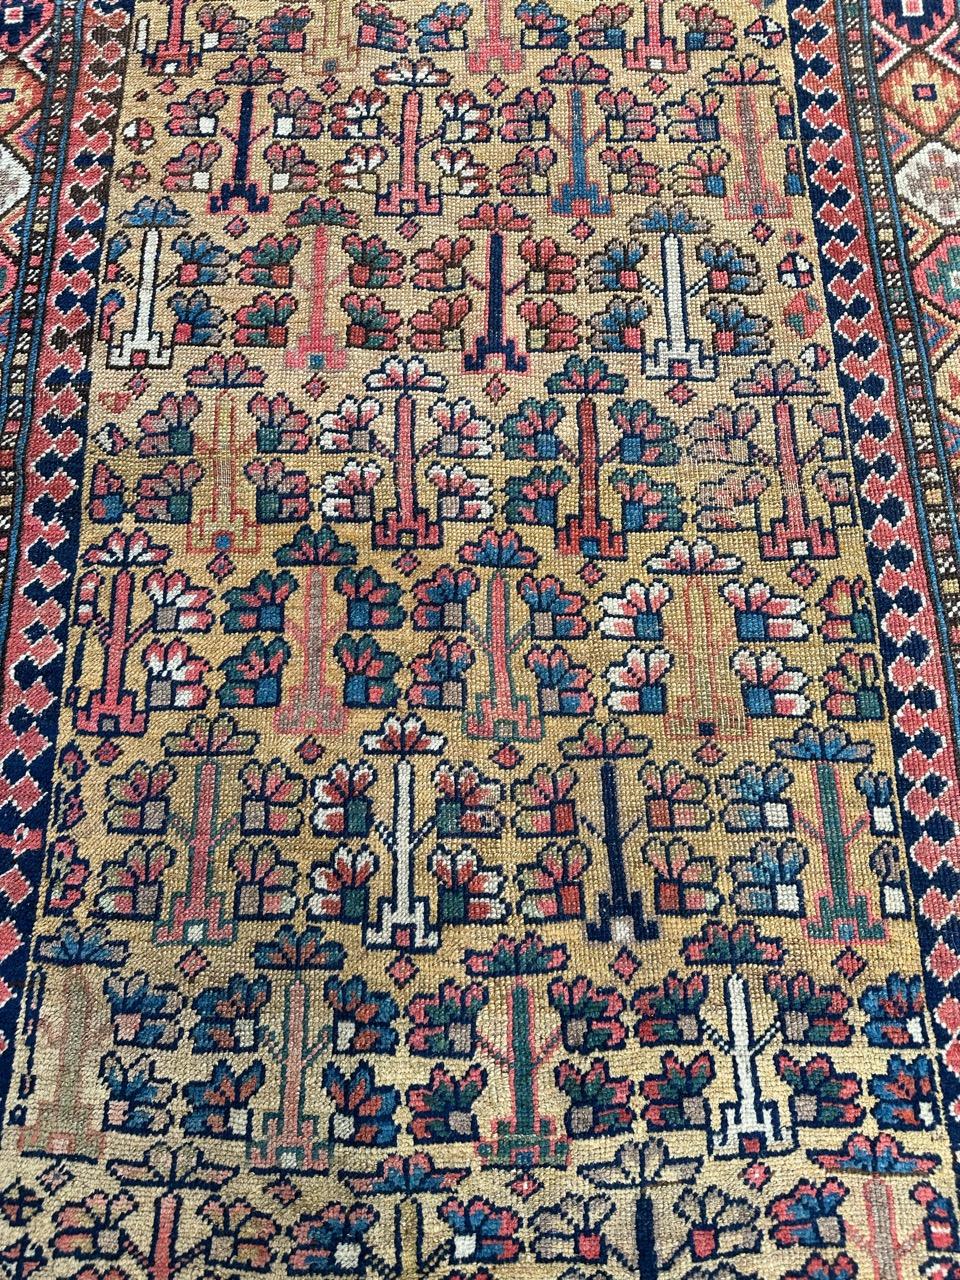 Kazakhstani Wonderful Antique Tribal Collectible Kurdish or Caucasian Rug For Sale